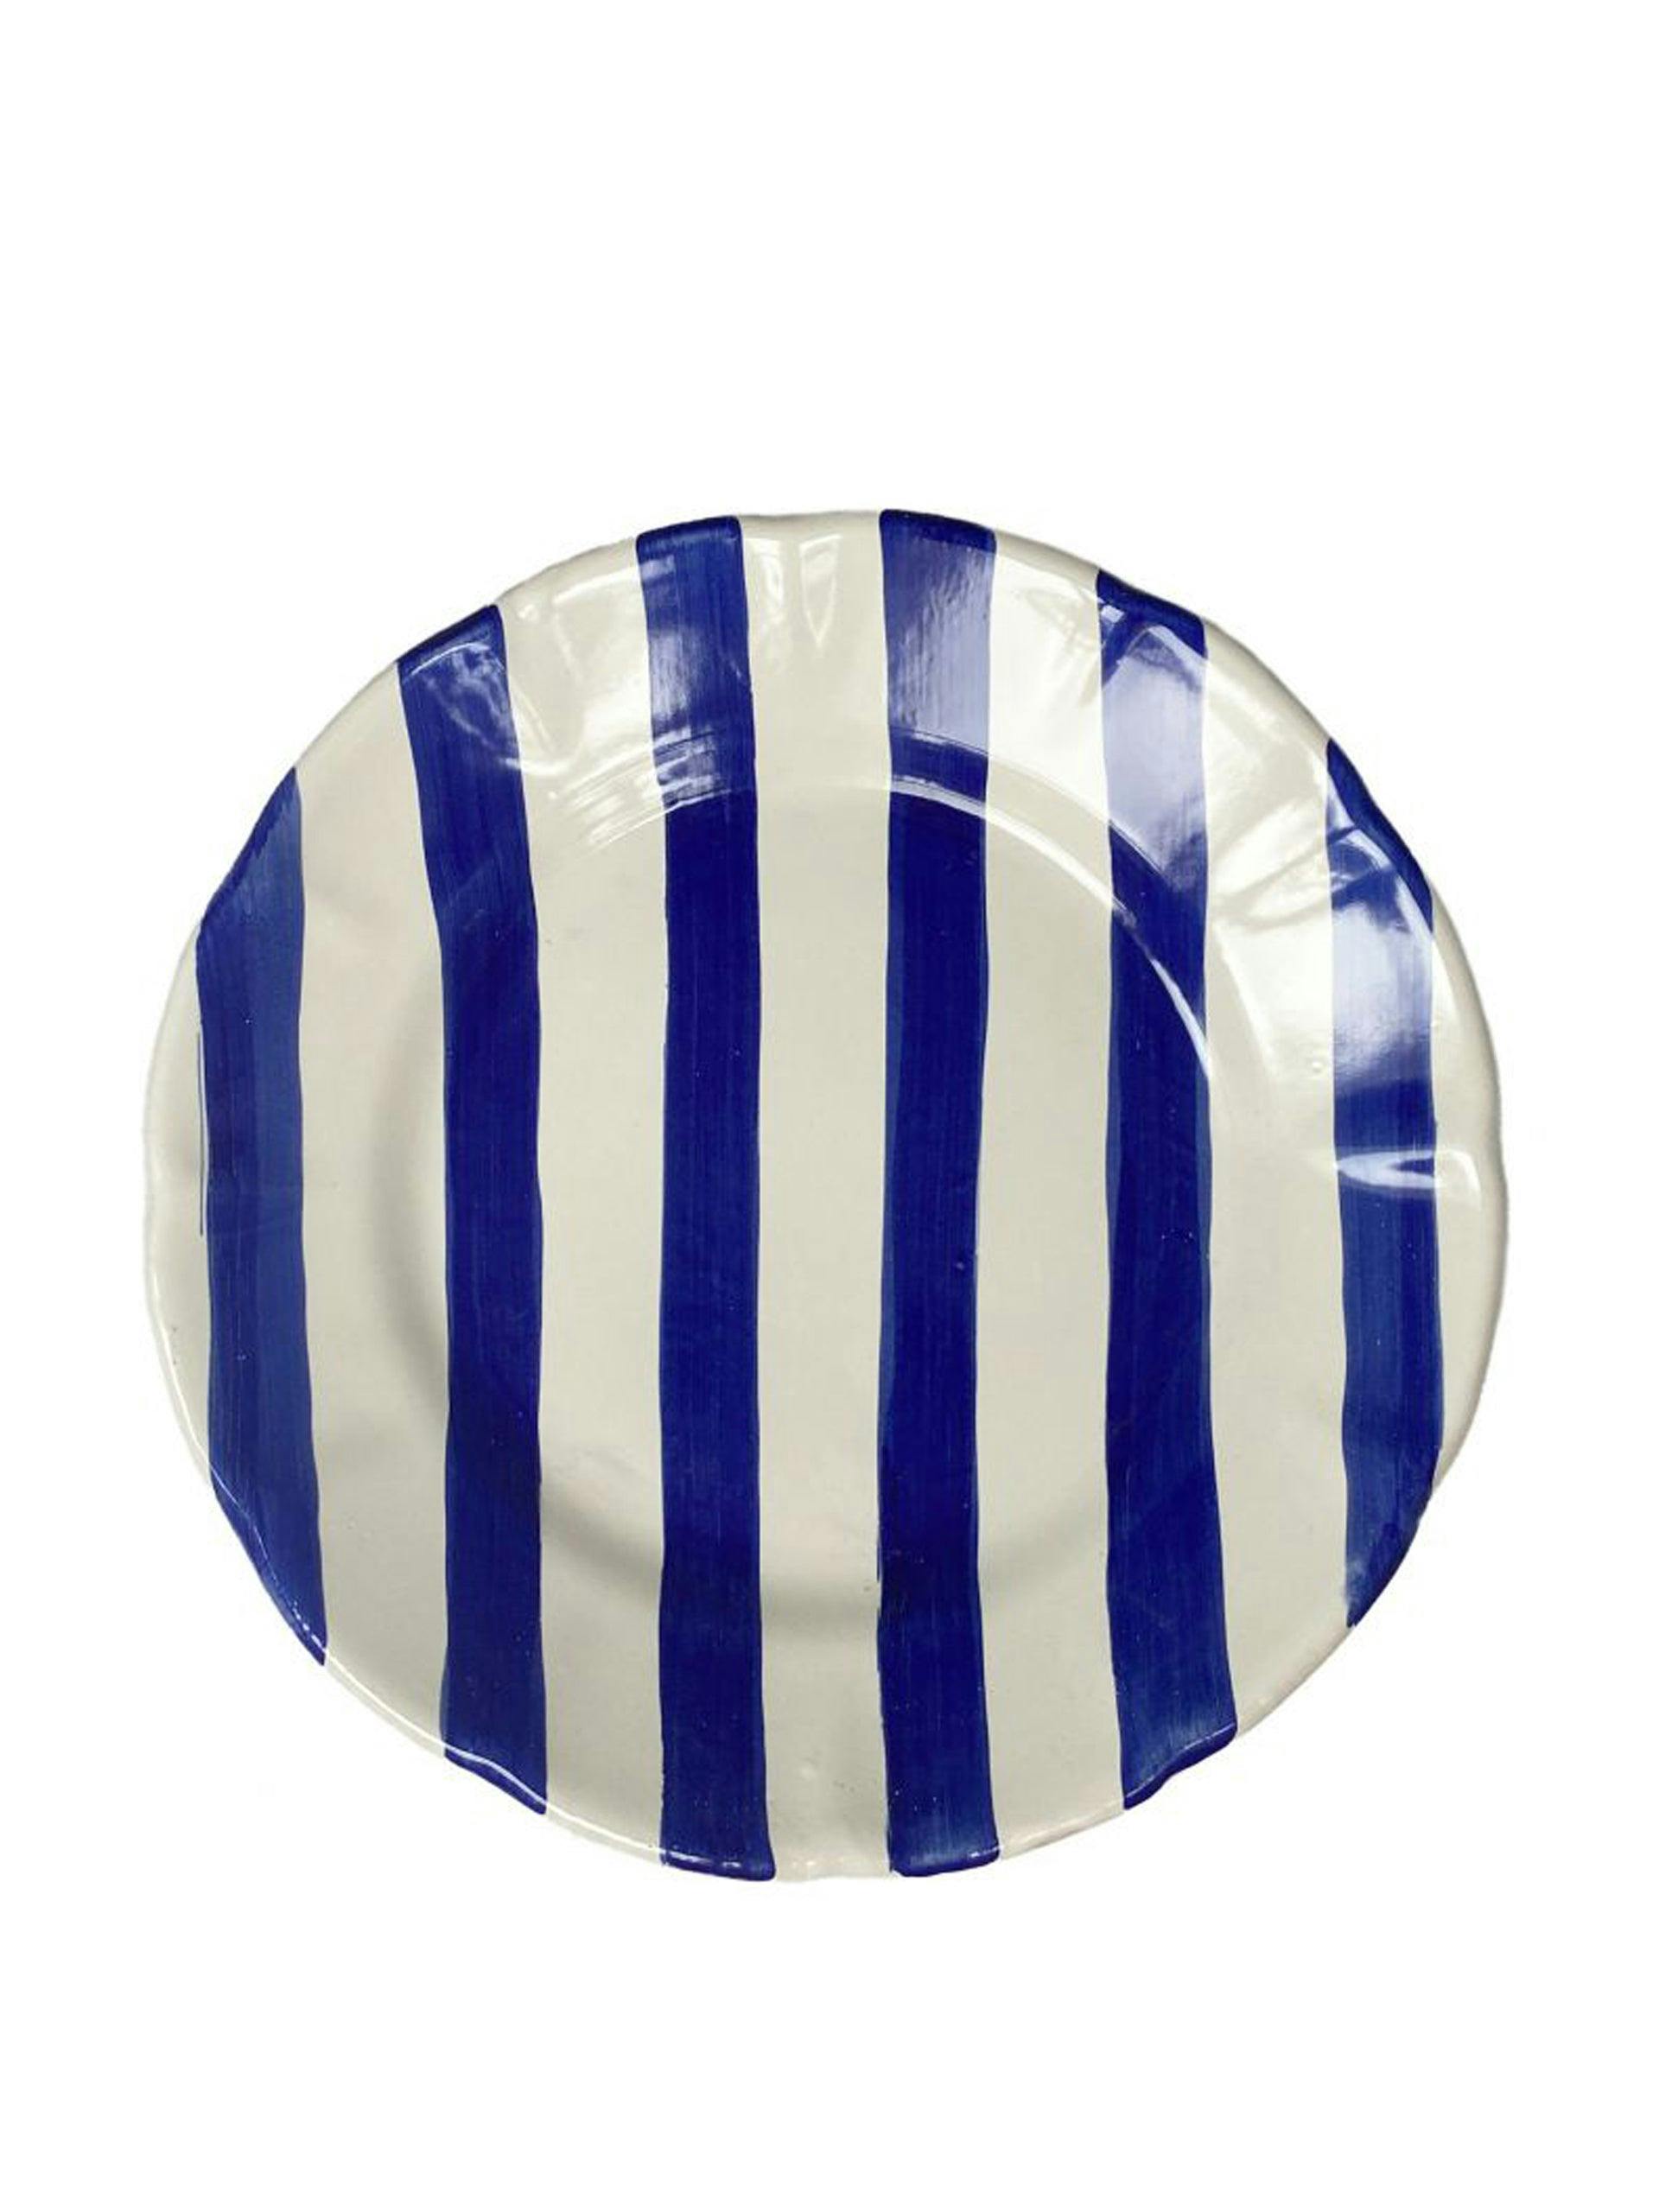 Blue striped plate